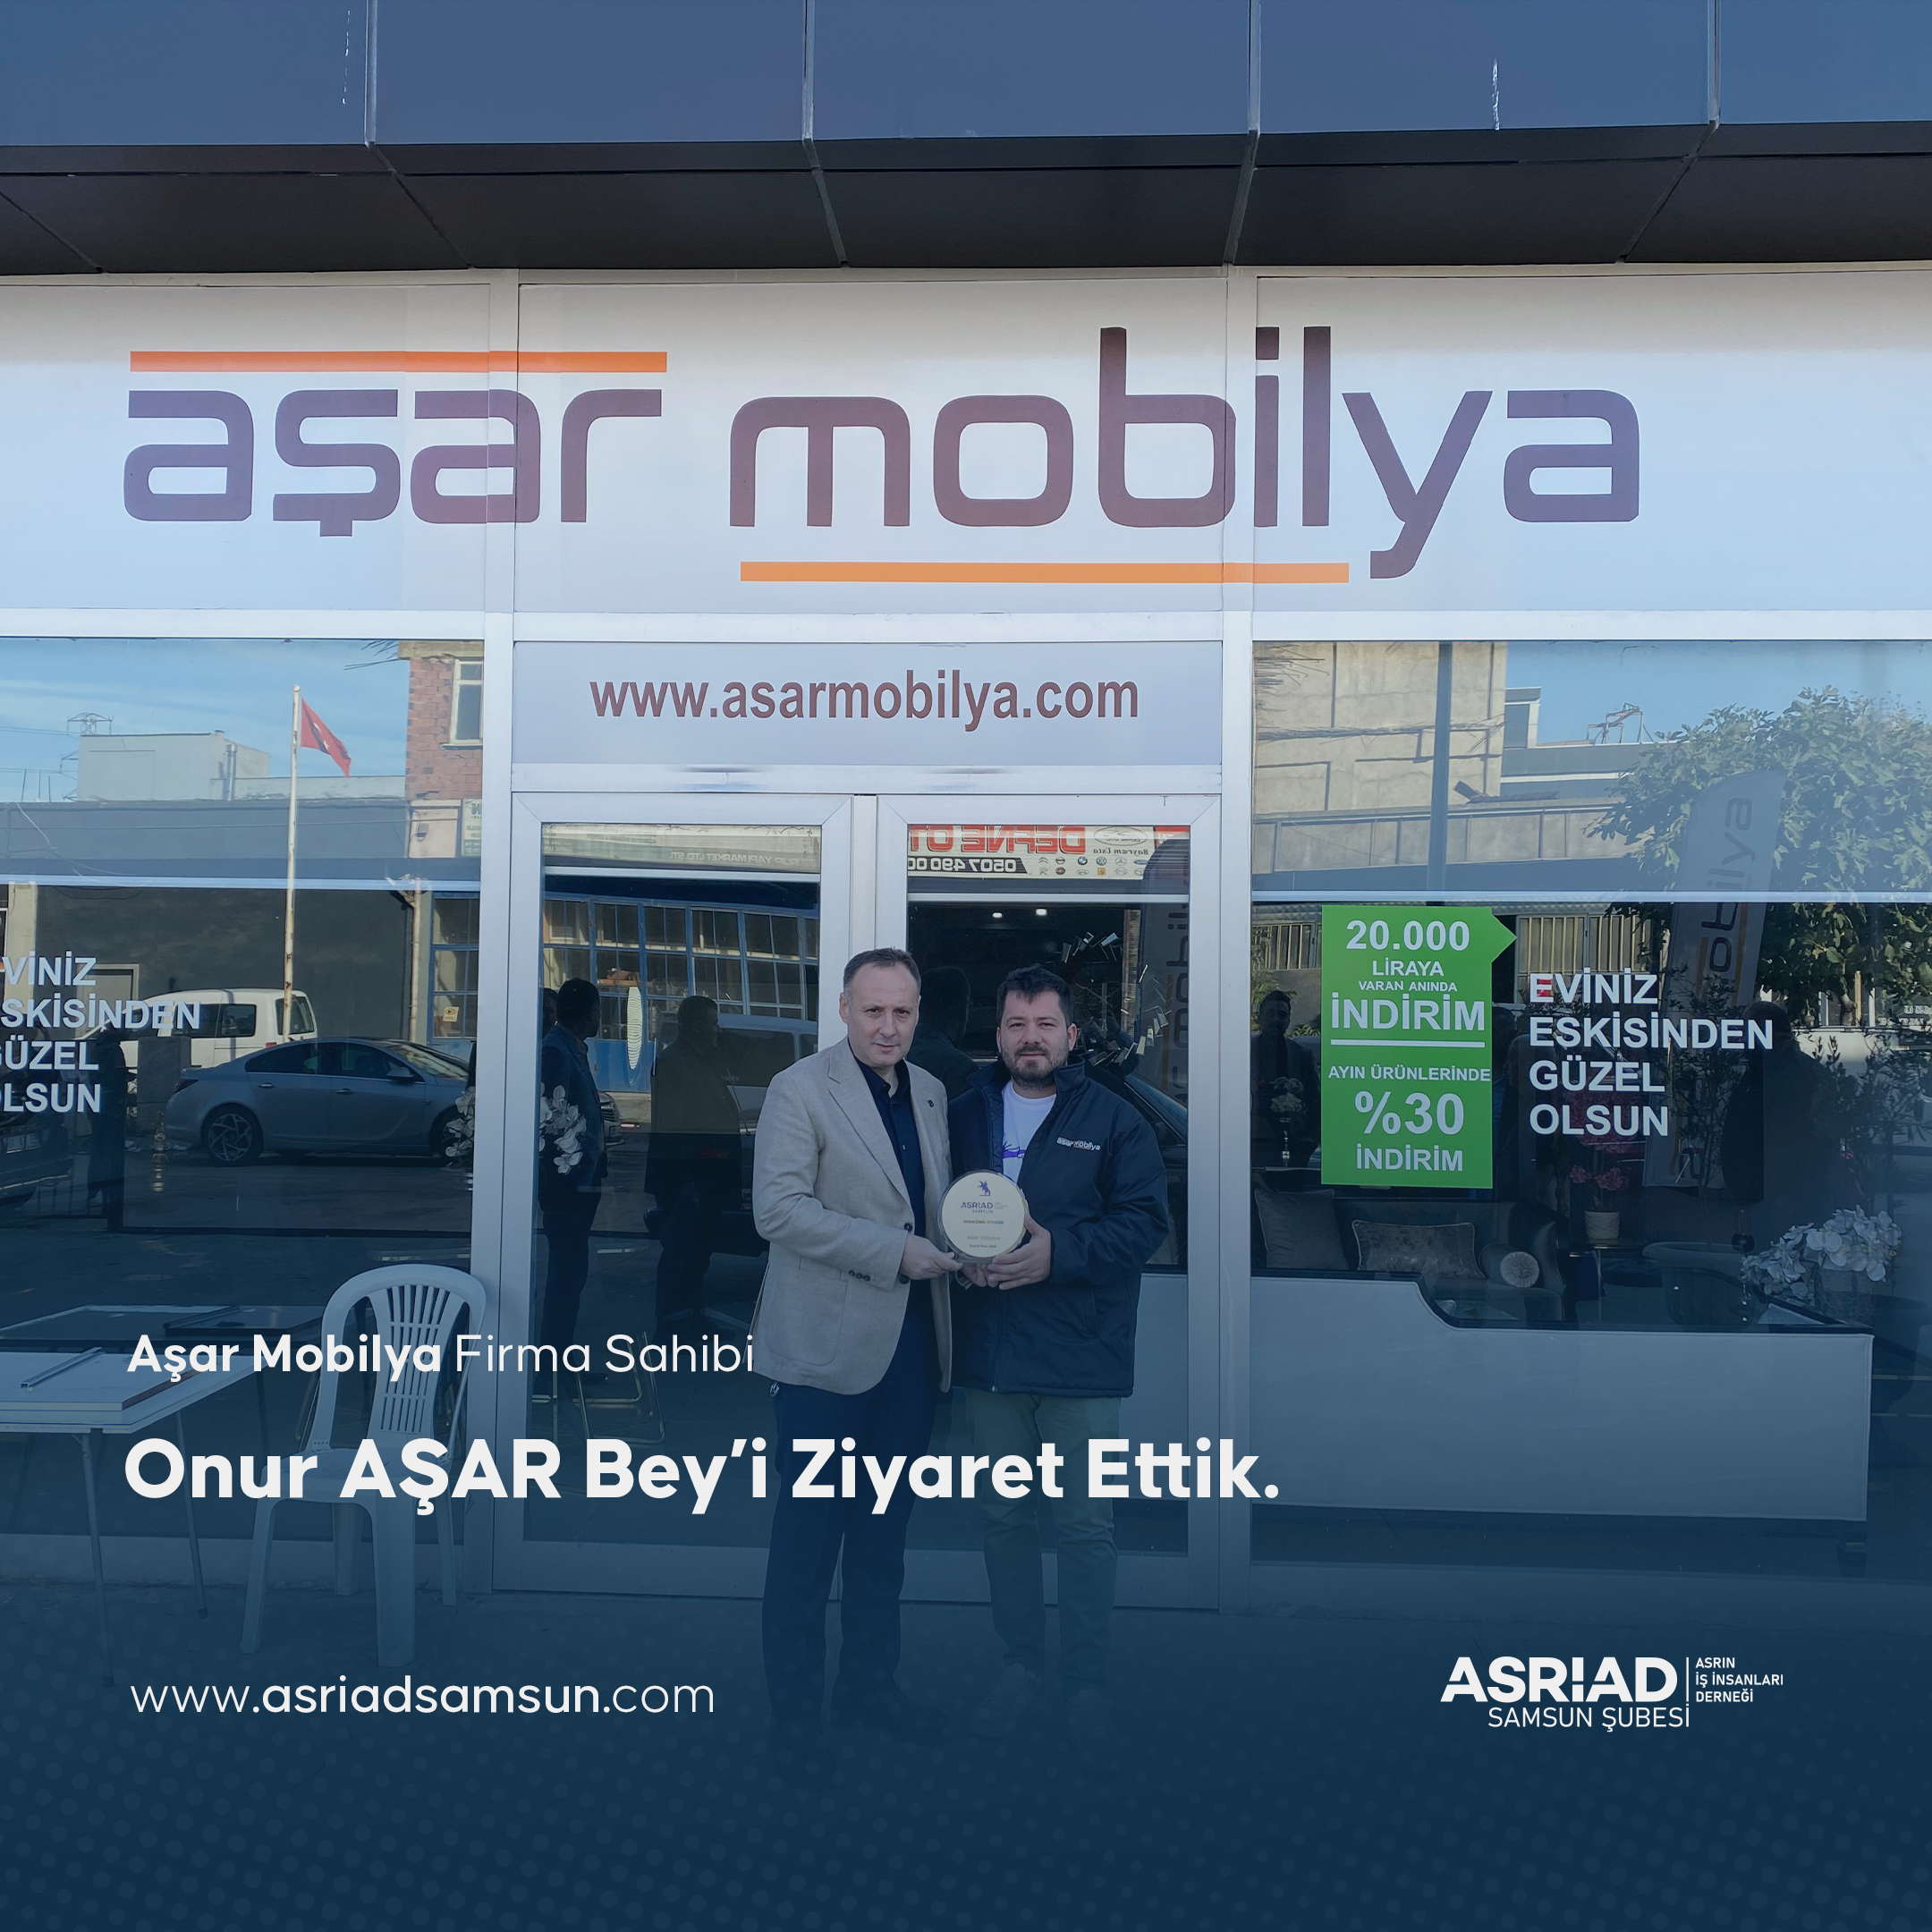 ASRİAD Aşar Mobilya Yeni Üye Ziyareti 